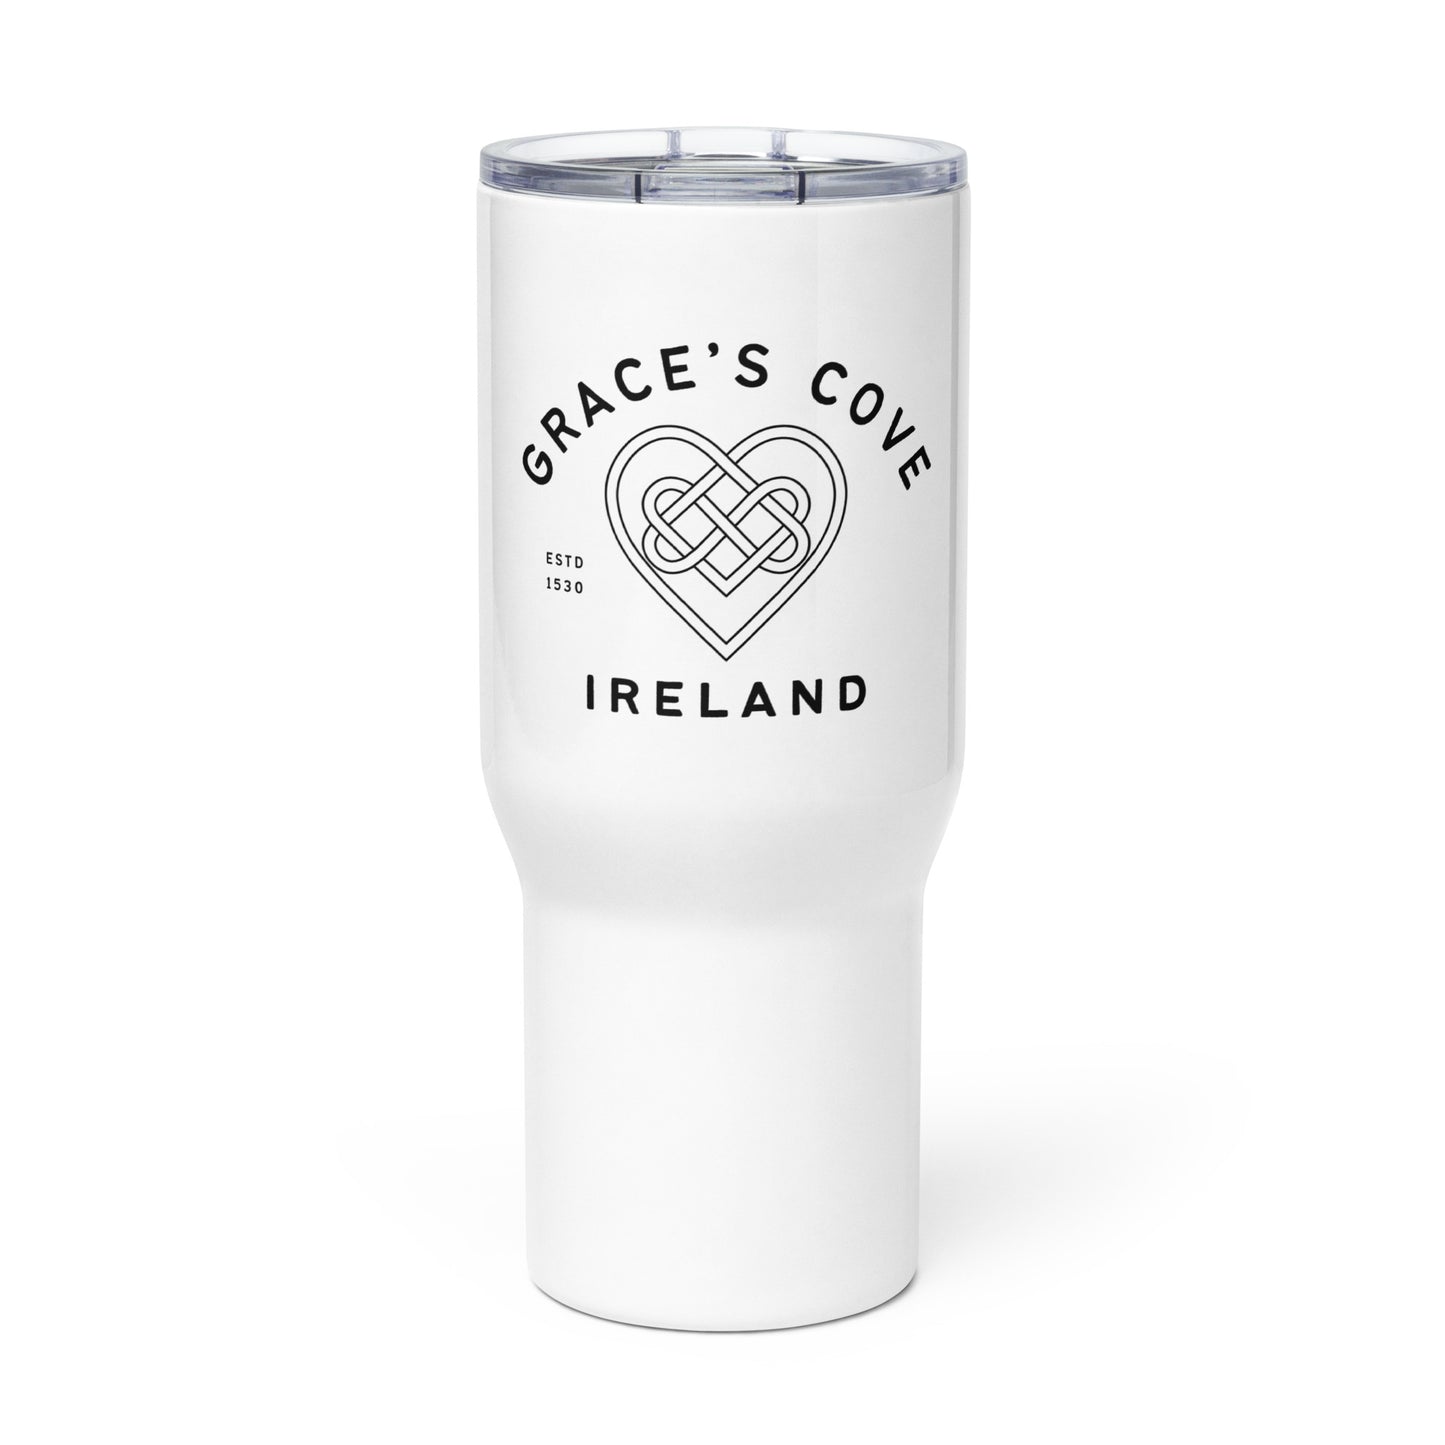 Grace's Cove Heart Travel mug with a handle